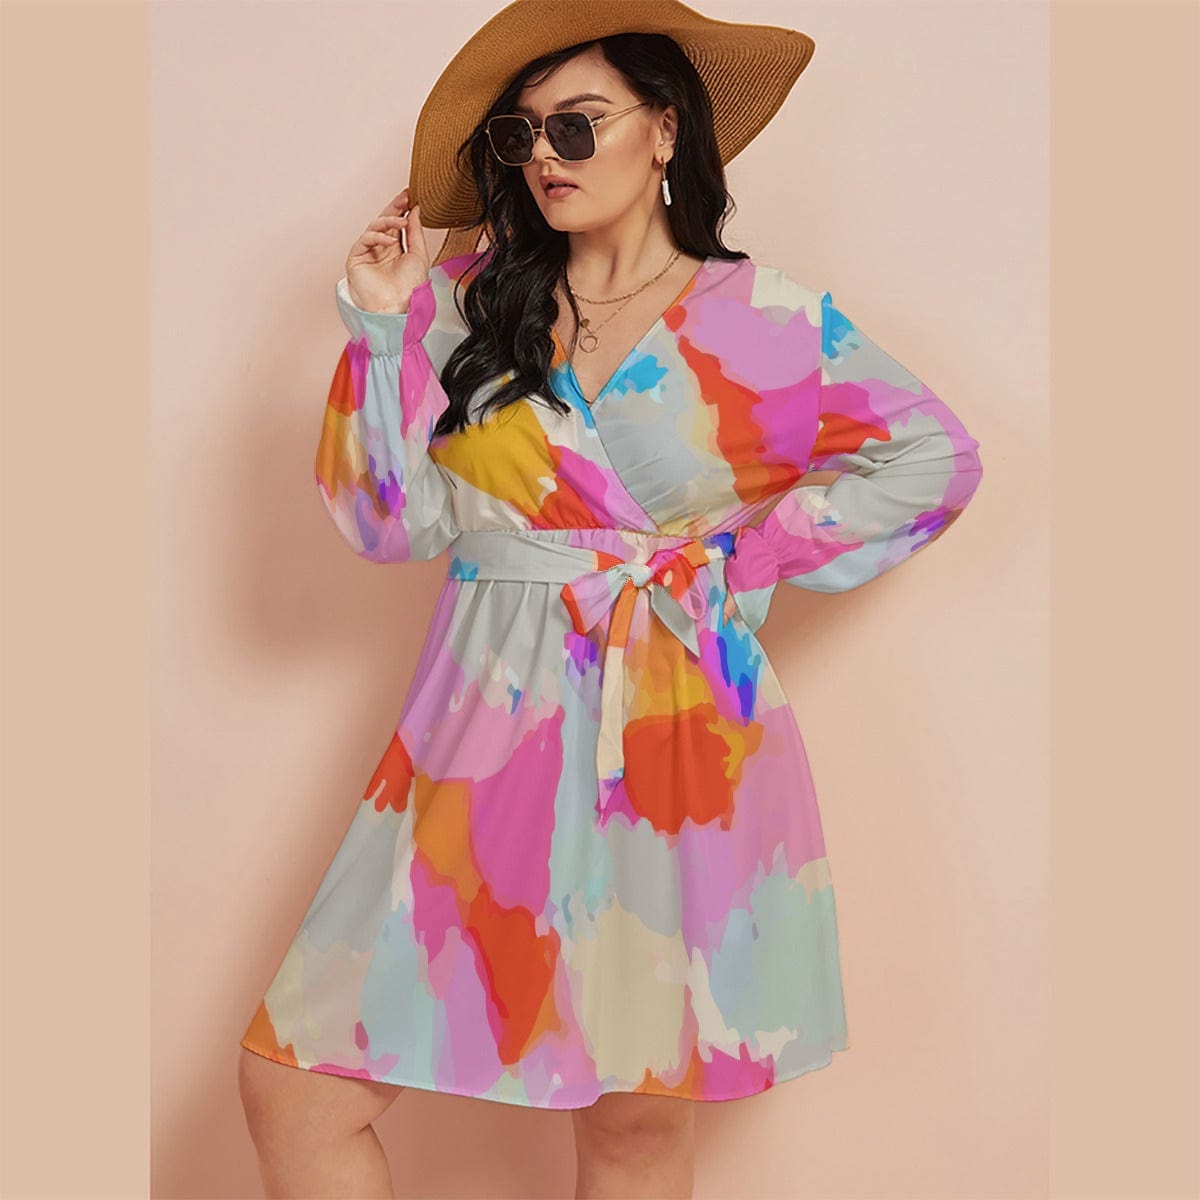 Yoycol Dresses Mod Colors Print Women's V-neck Dress With Waistband